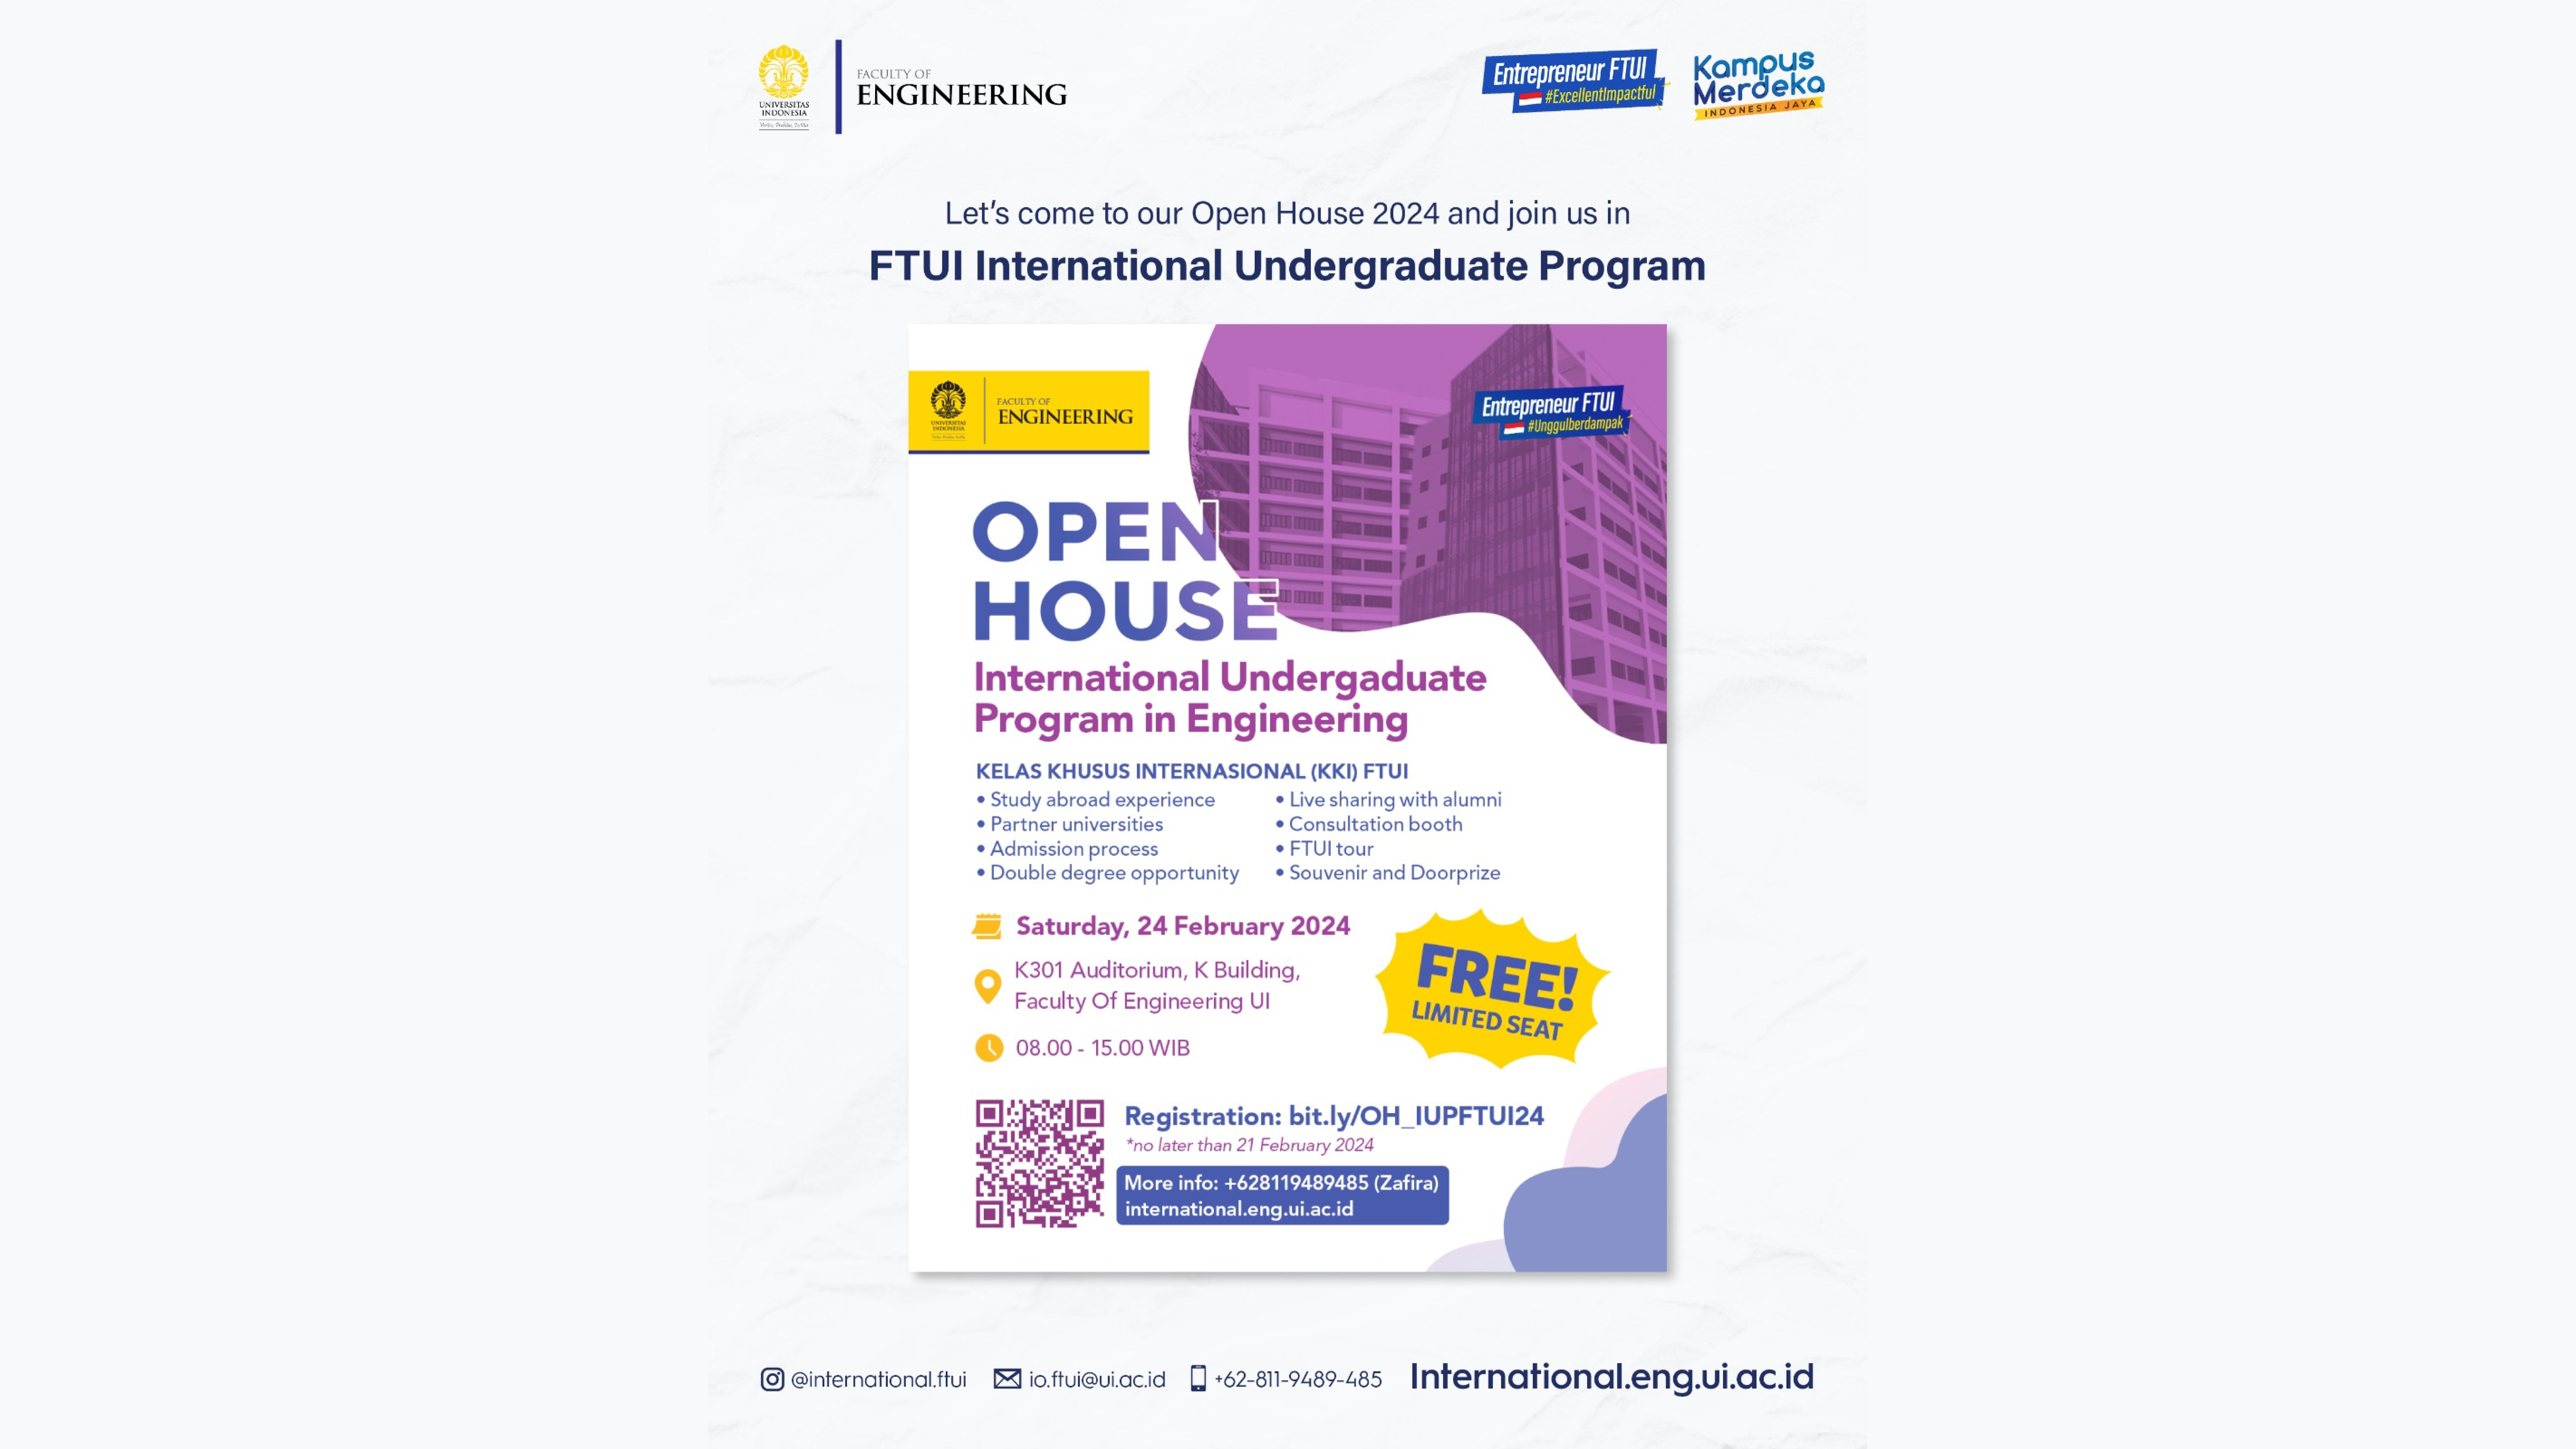 Open House - International Undergraduate Program in Engineering